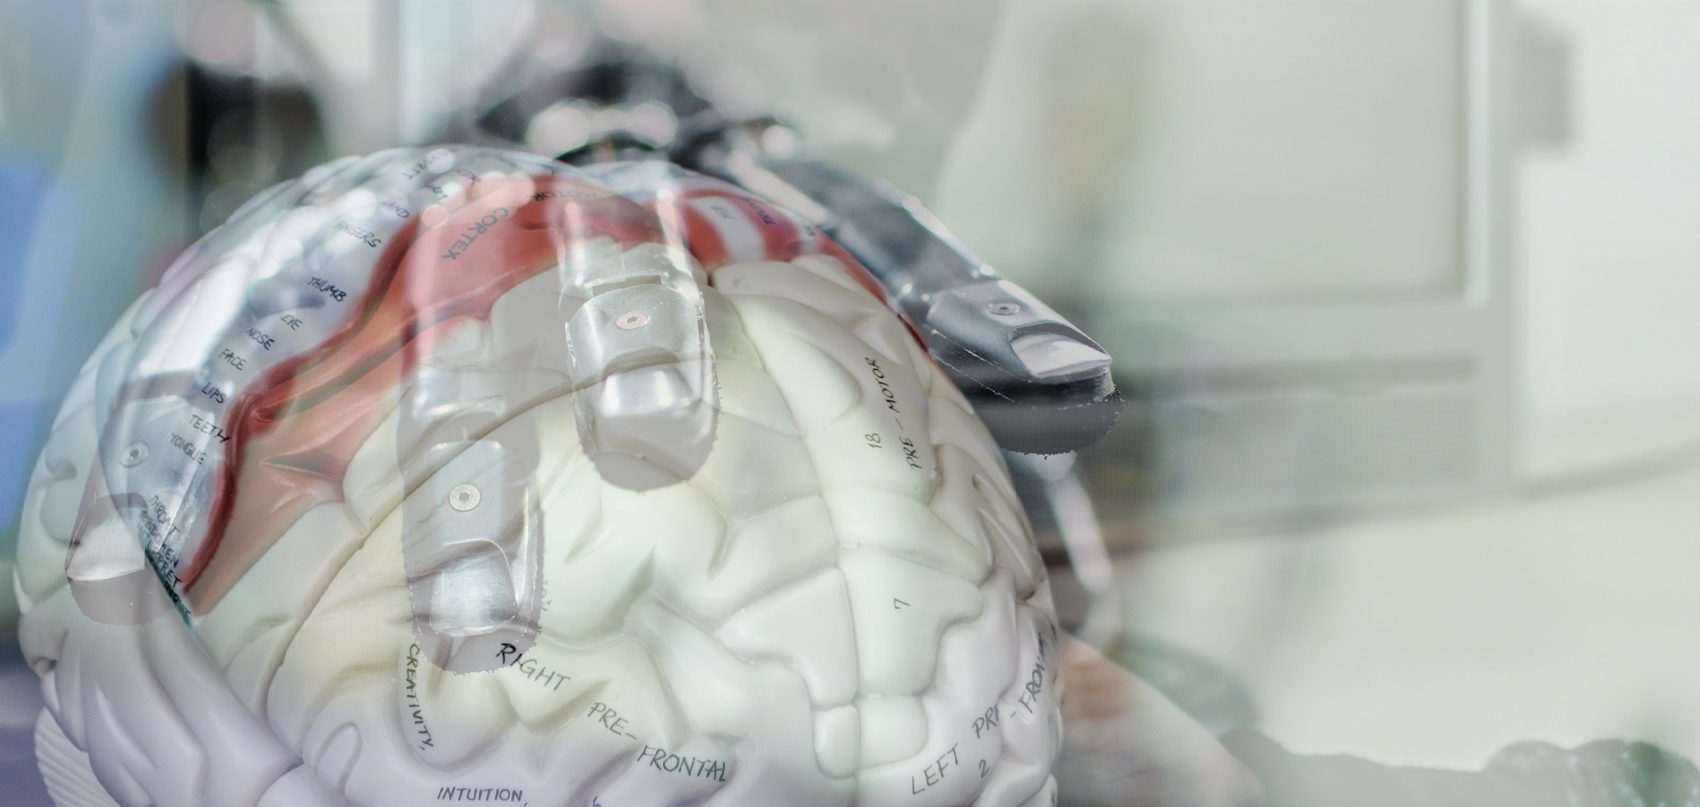 Crossfade, brain and robot hand